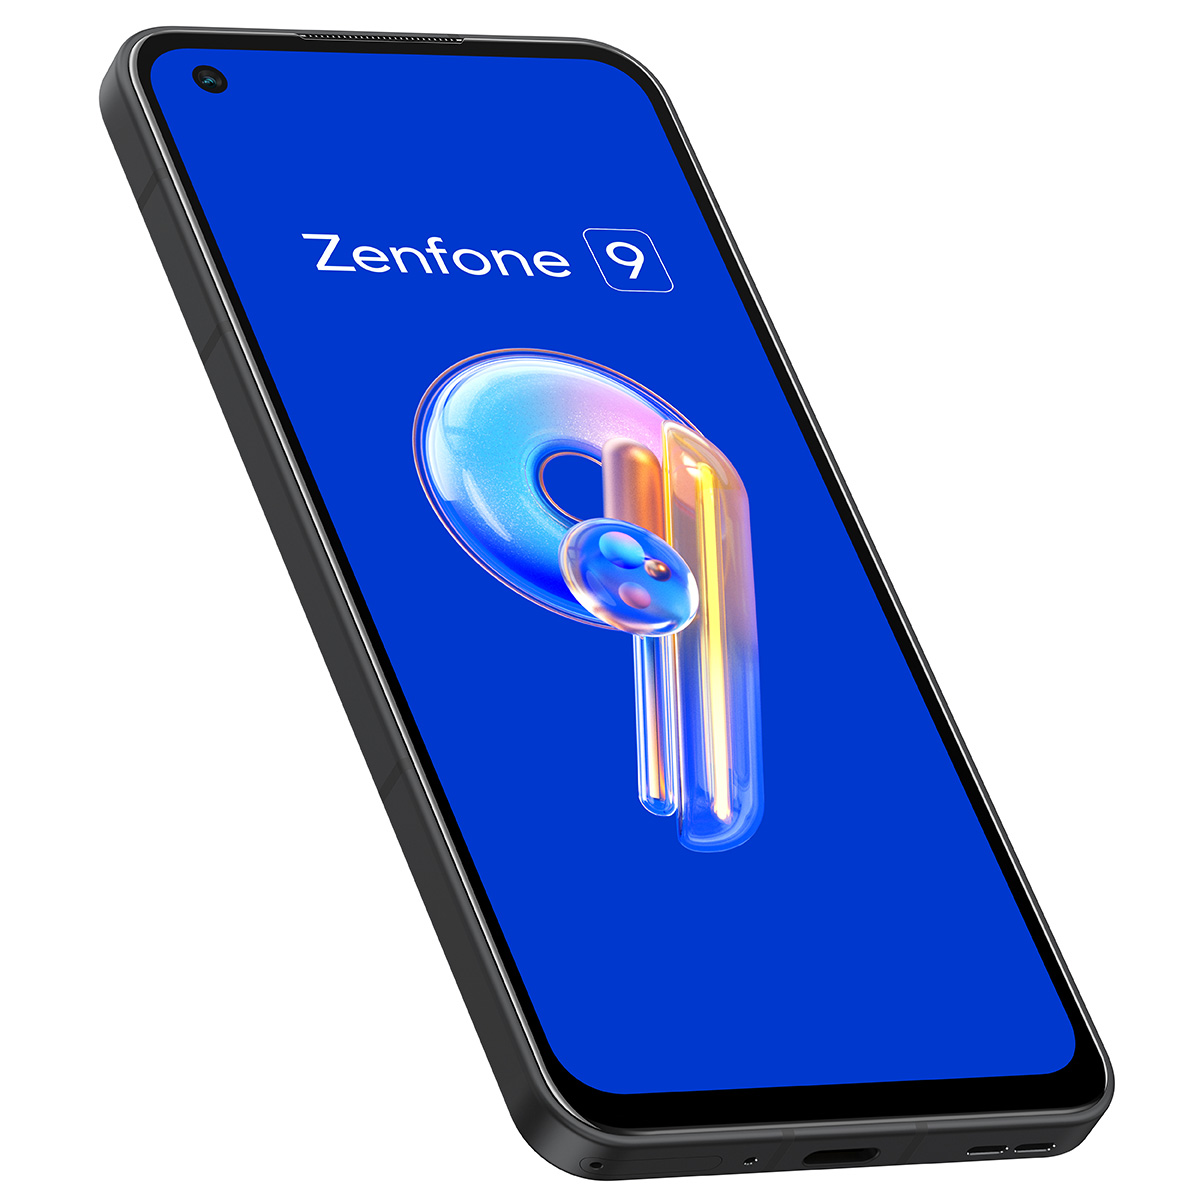 Zenfone 9 /ミッドナイトブラック/128G/8G